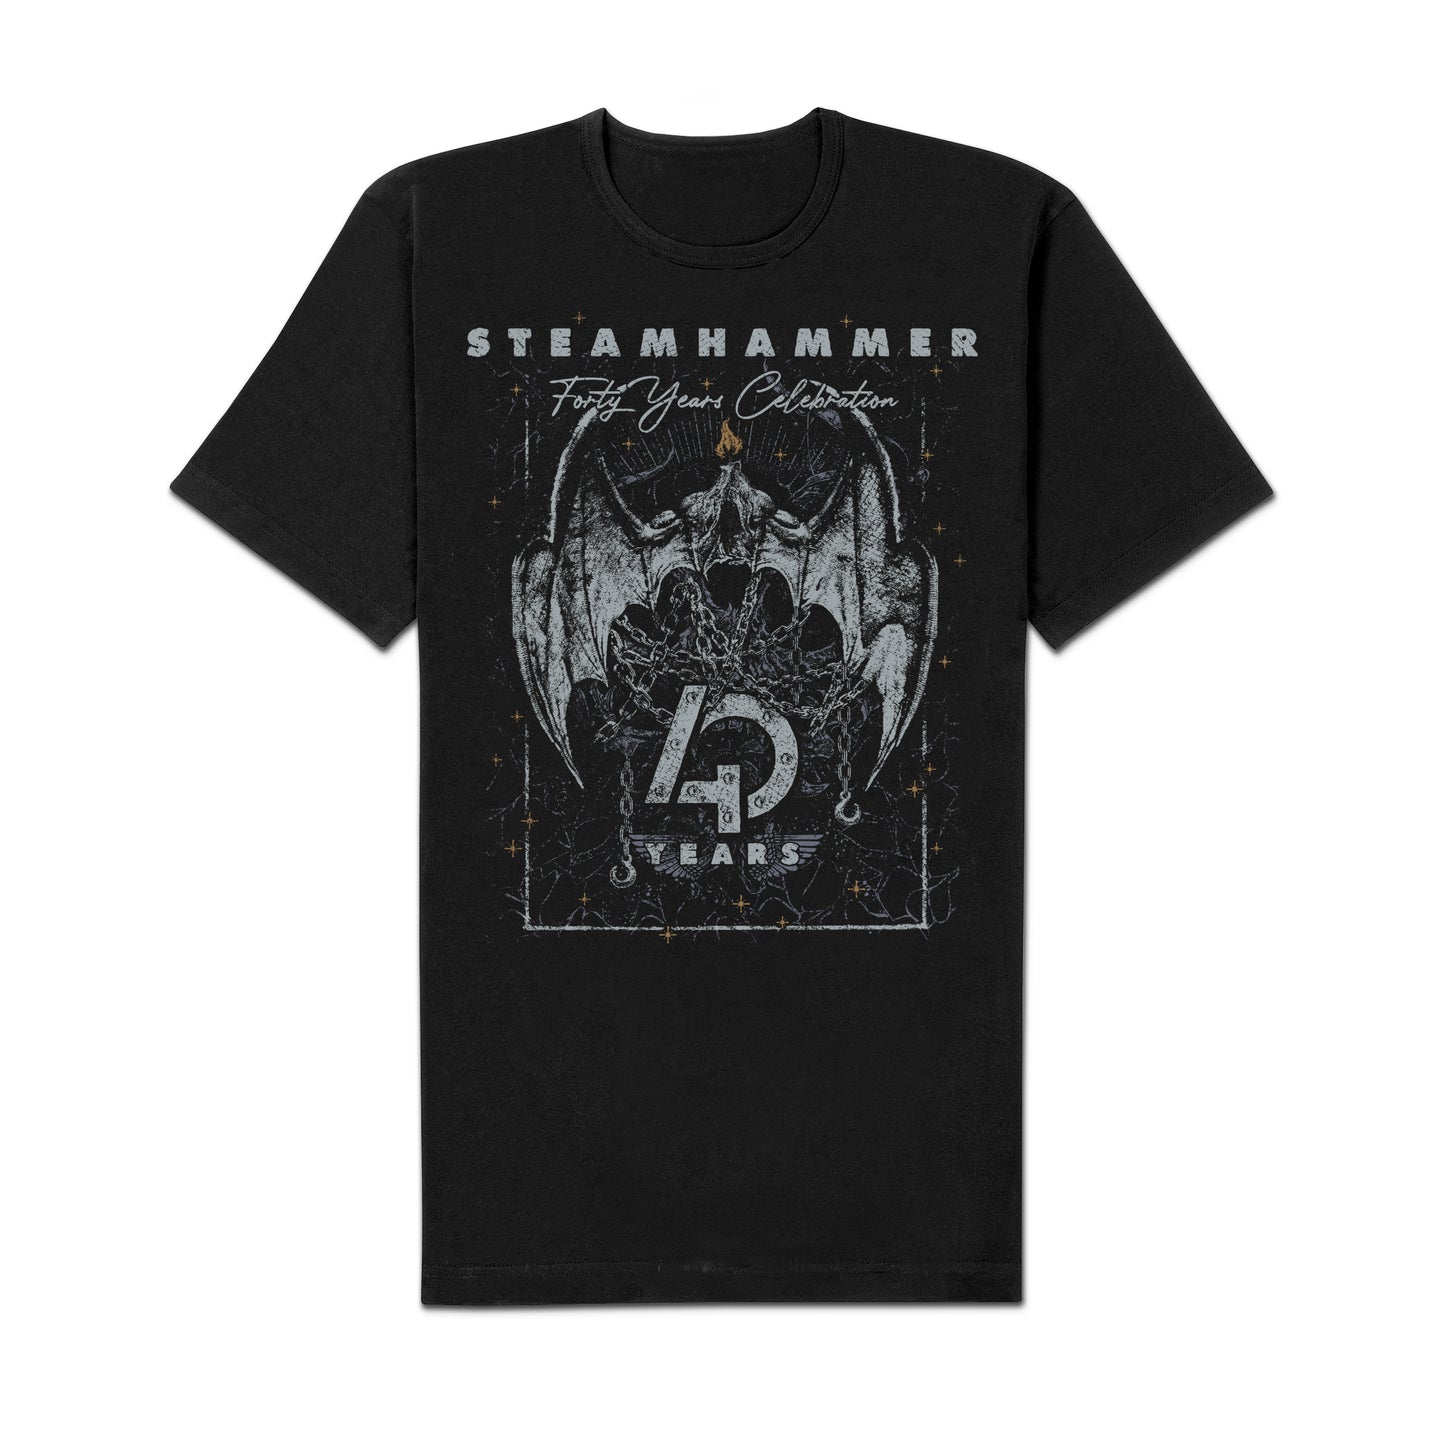 Steamhammer "Forty" Shirt